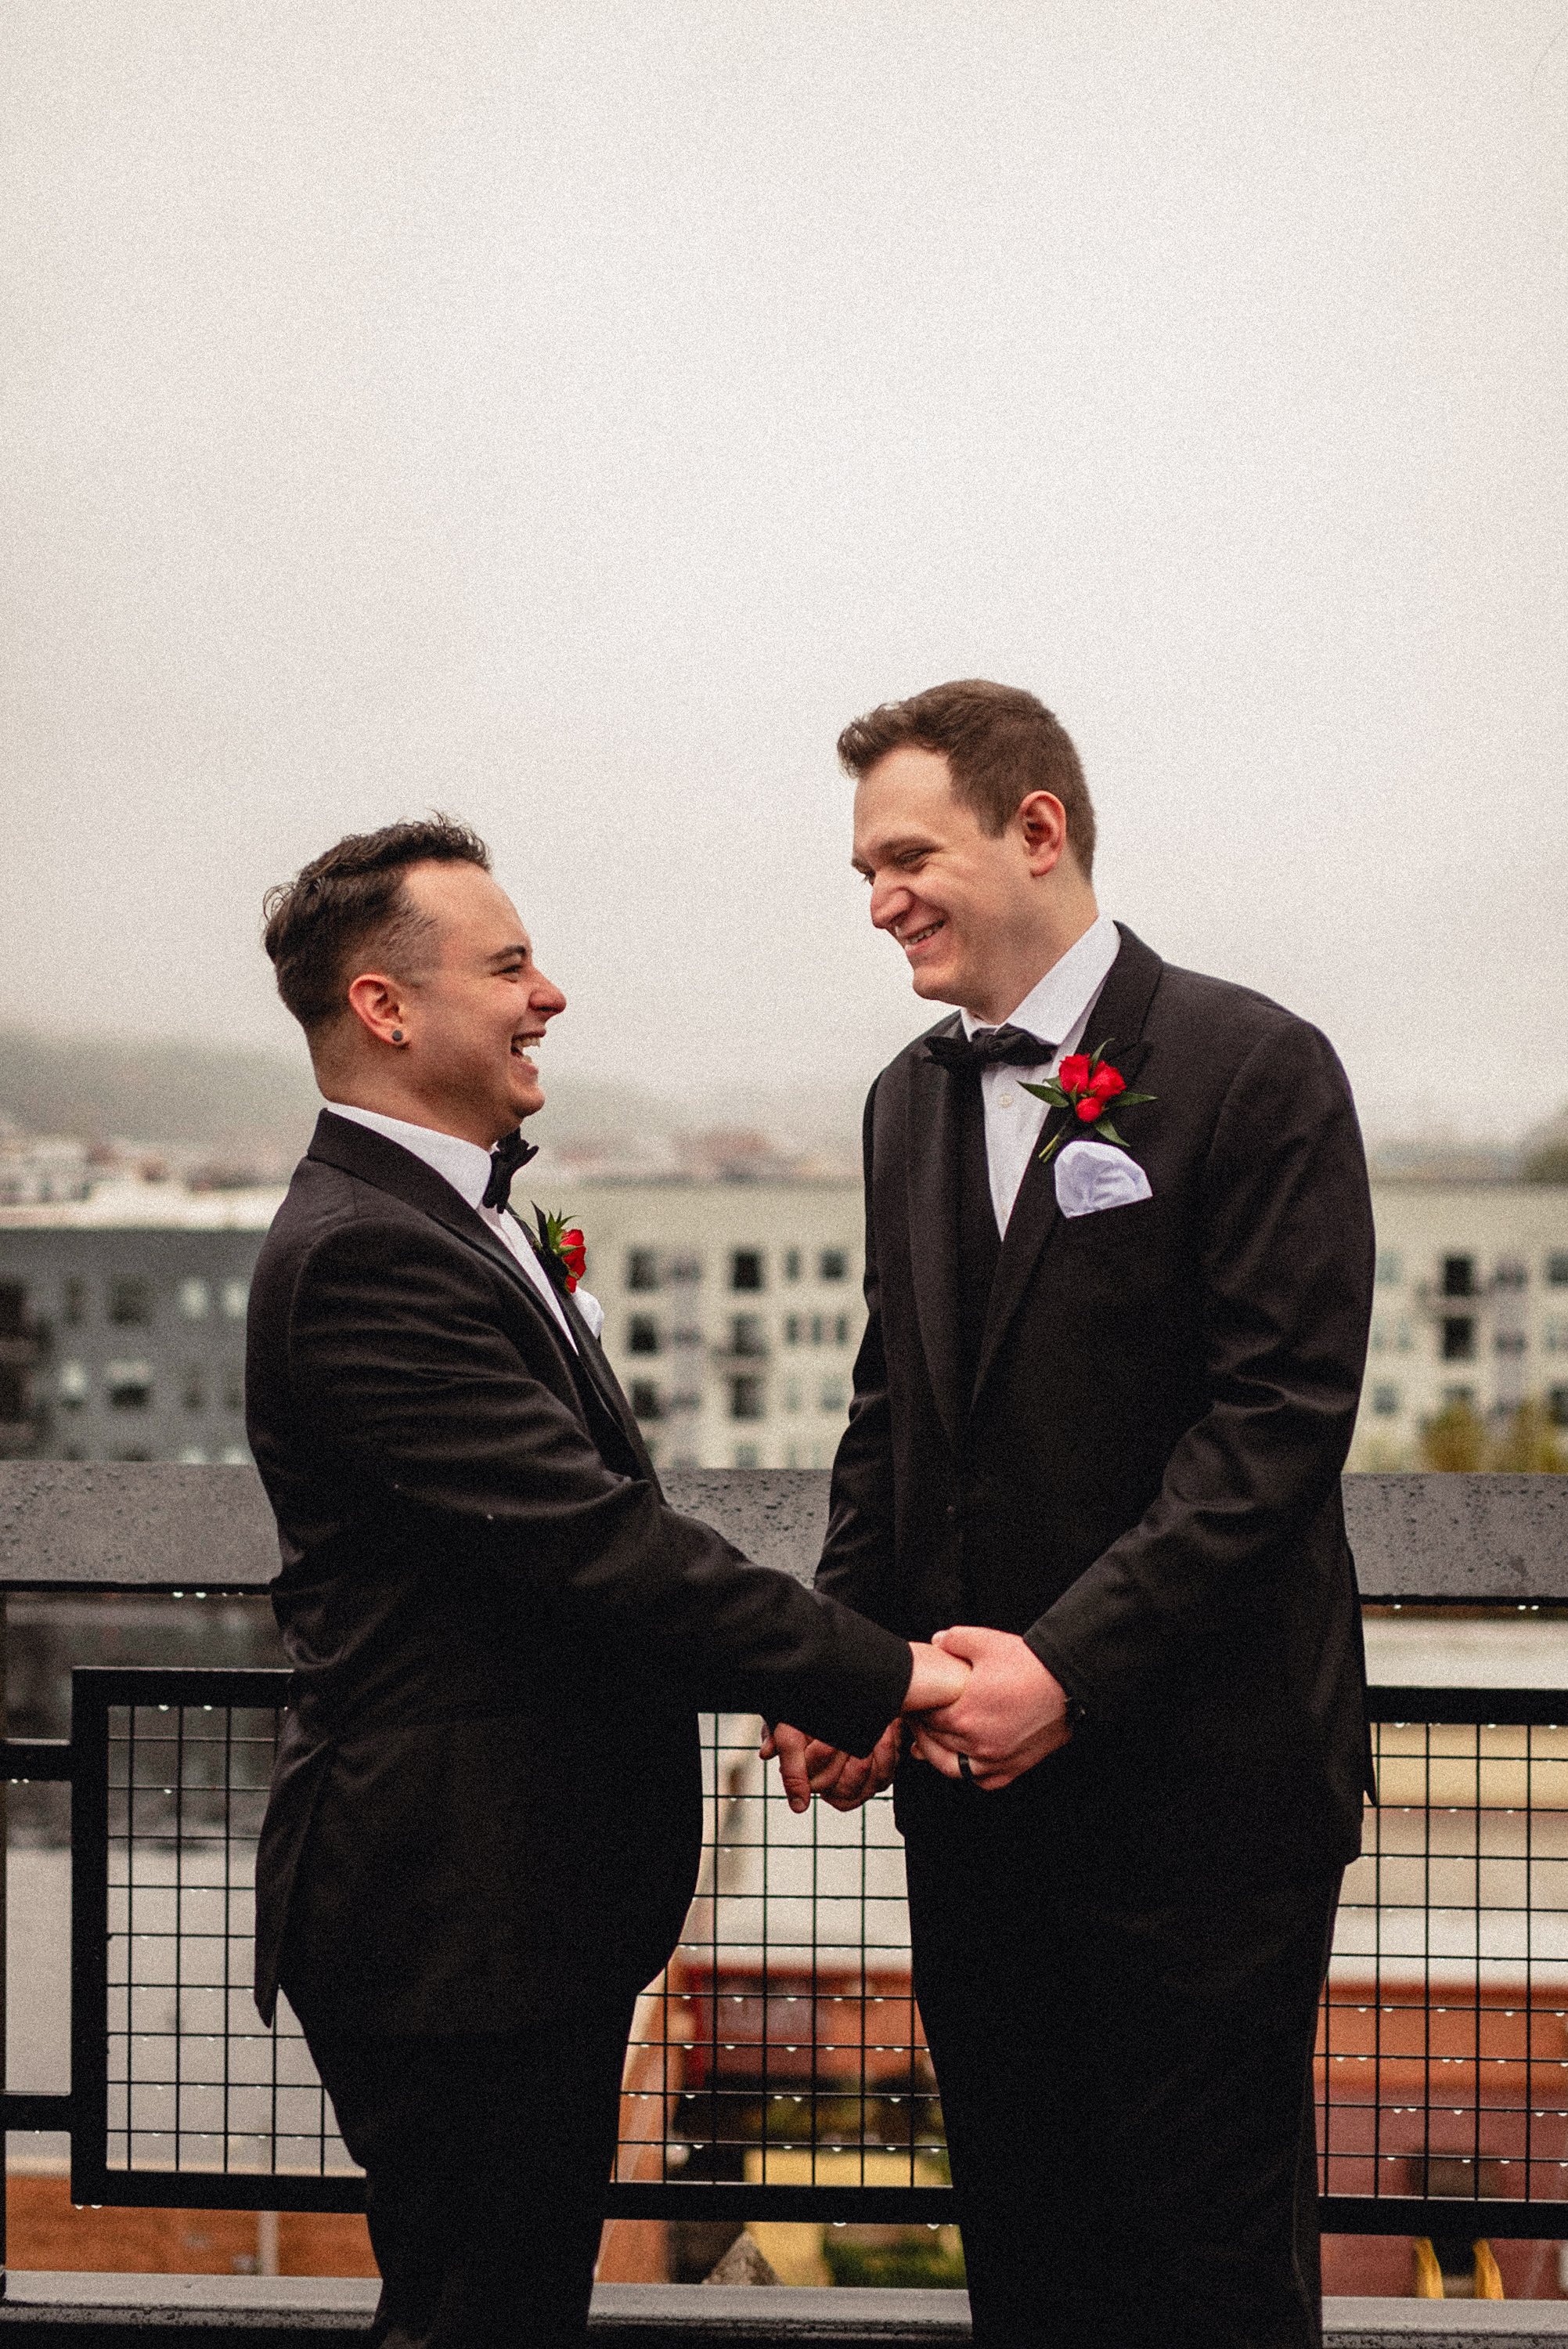 Requiem Images - LGBTQ Pittsburgh PA WV Elopement Wedding Photographer - Randy Zach Tryp Hotel Rooftop Micro Wedding -46.jpg